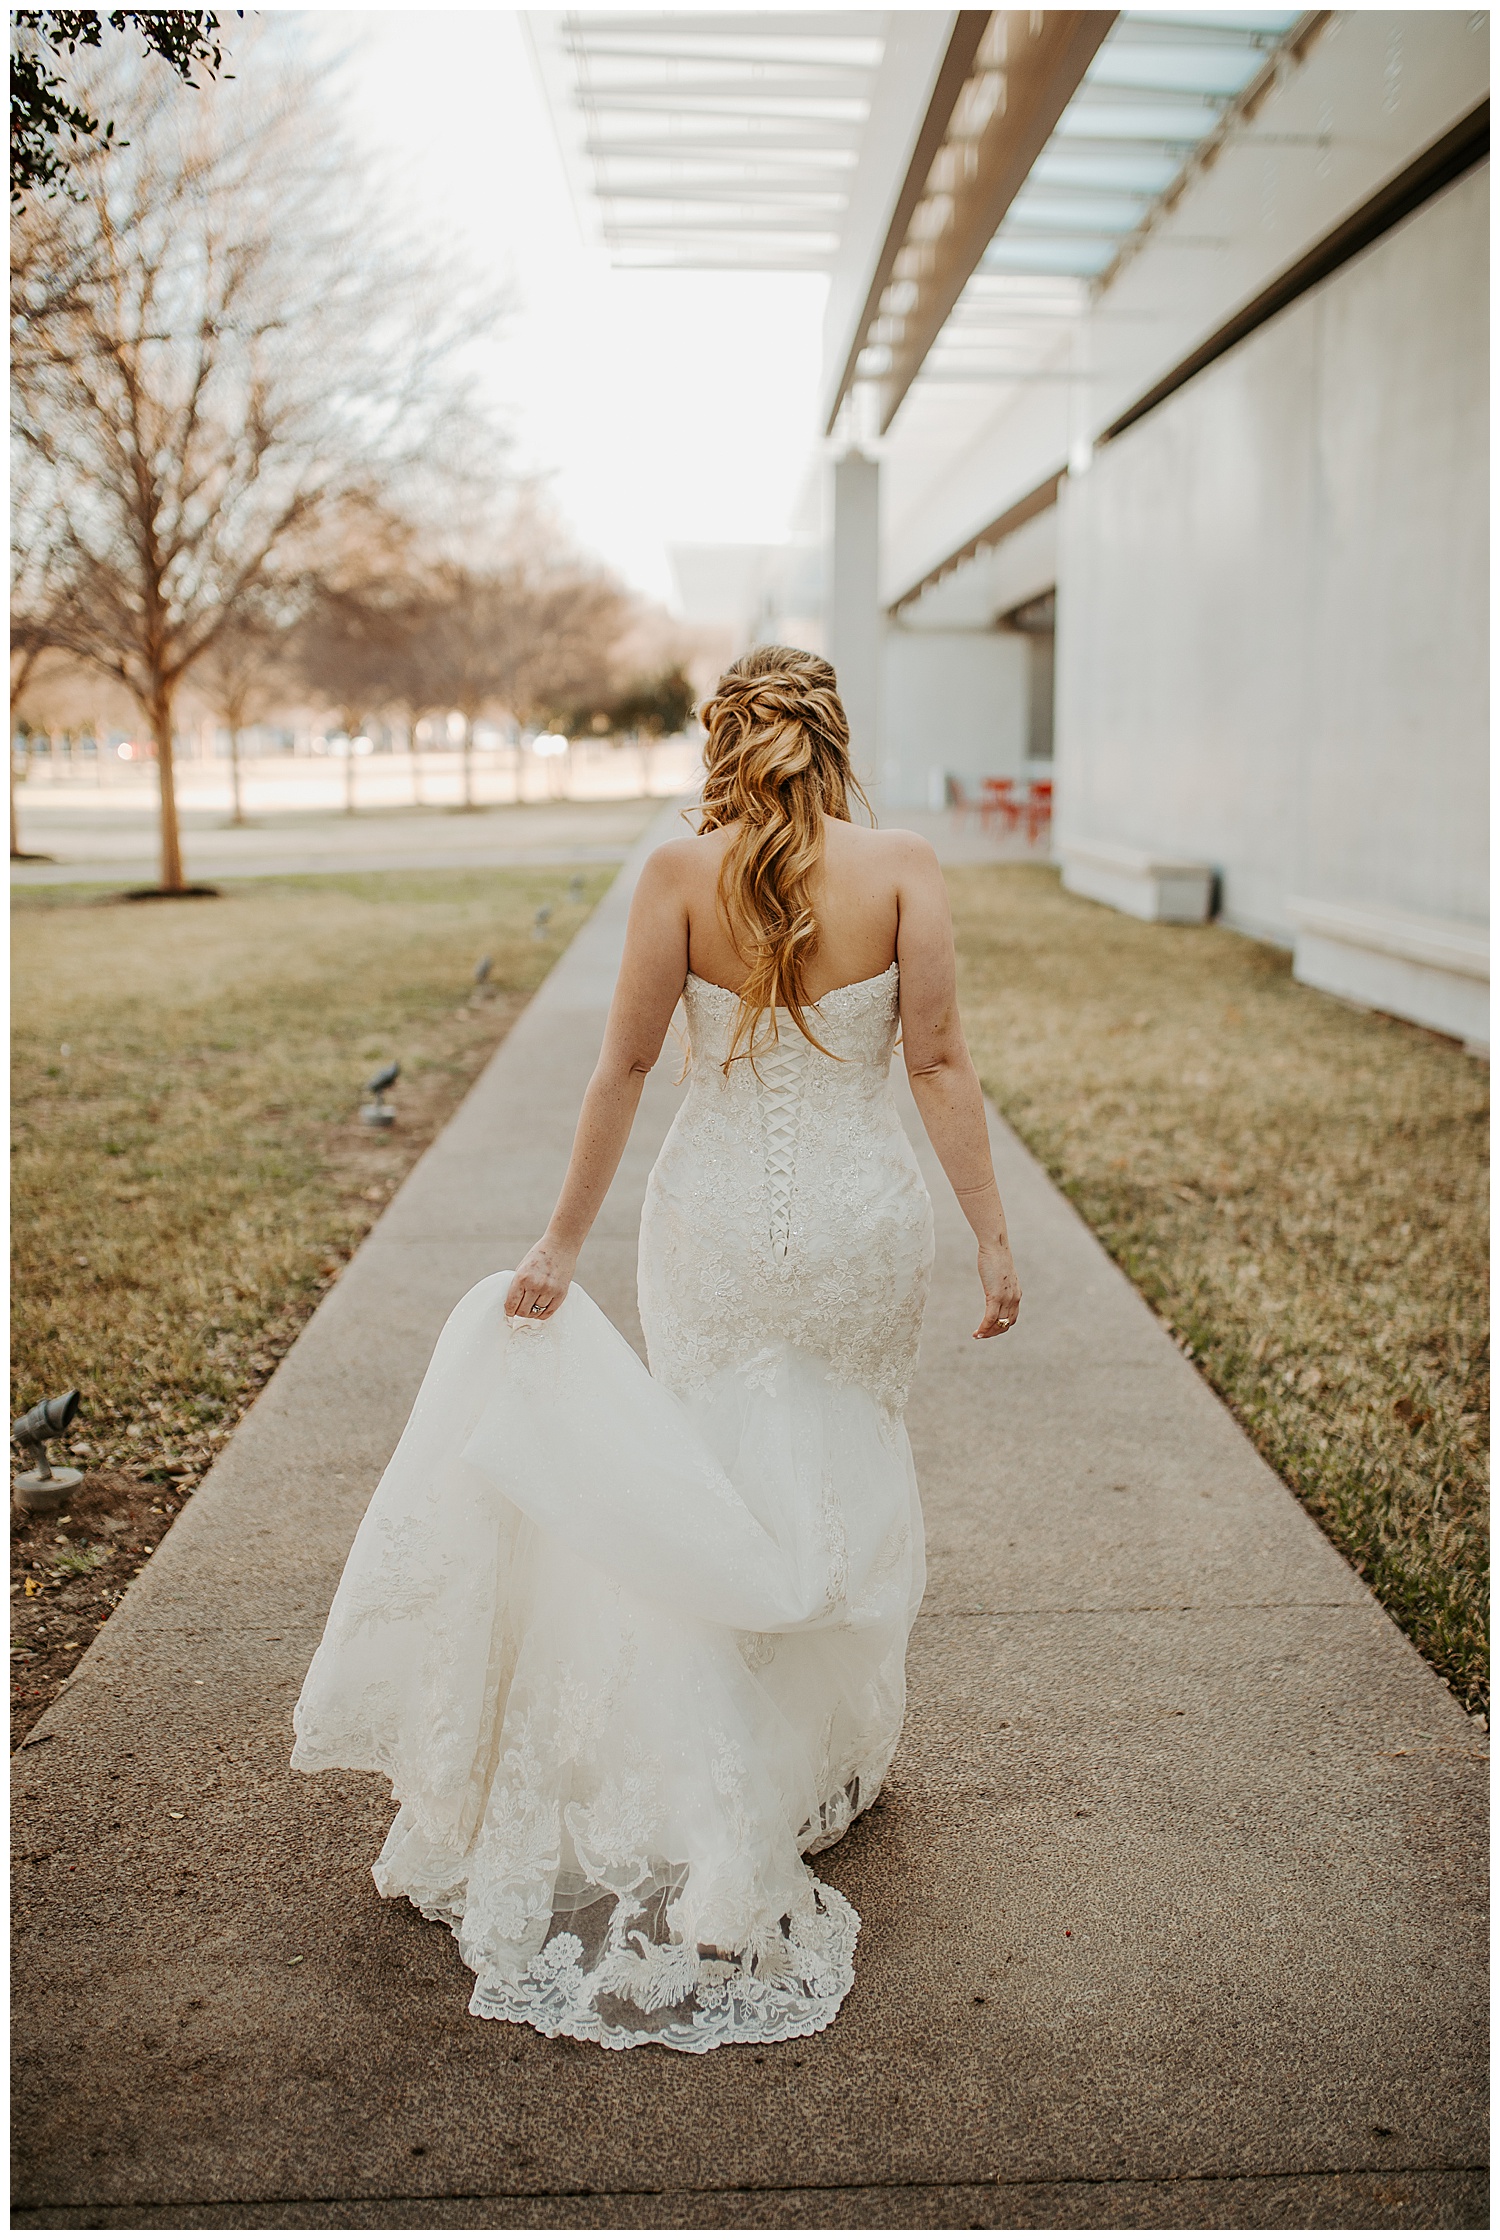 Laken-Mackenzie-Photography-Alyssa-Bridals-Kimbell-Art-Museum-Dallas-Fort-Worth-Wedding-Photographer10.jpg